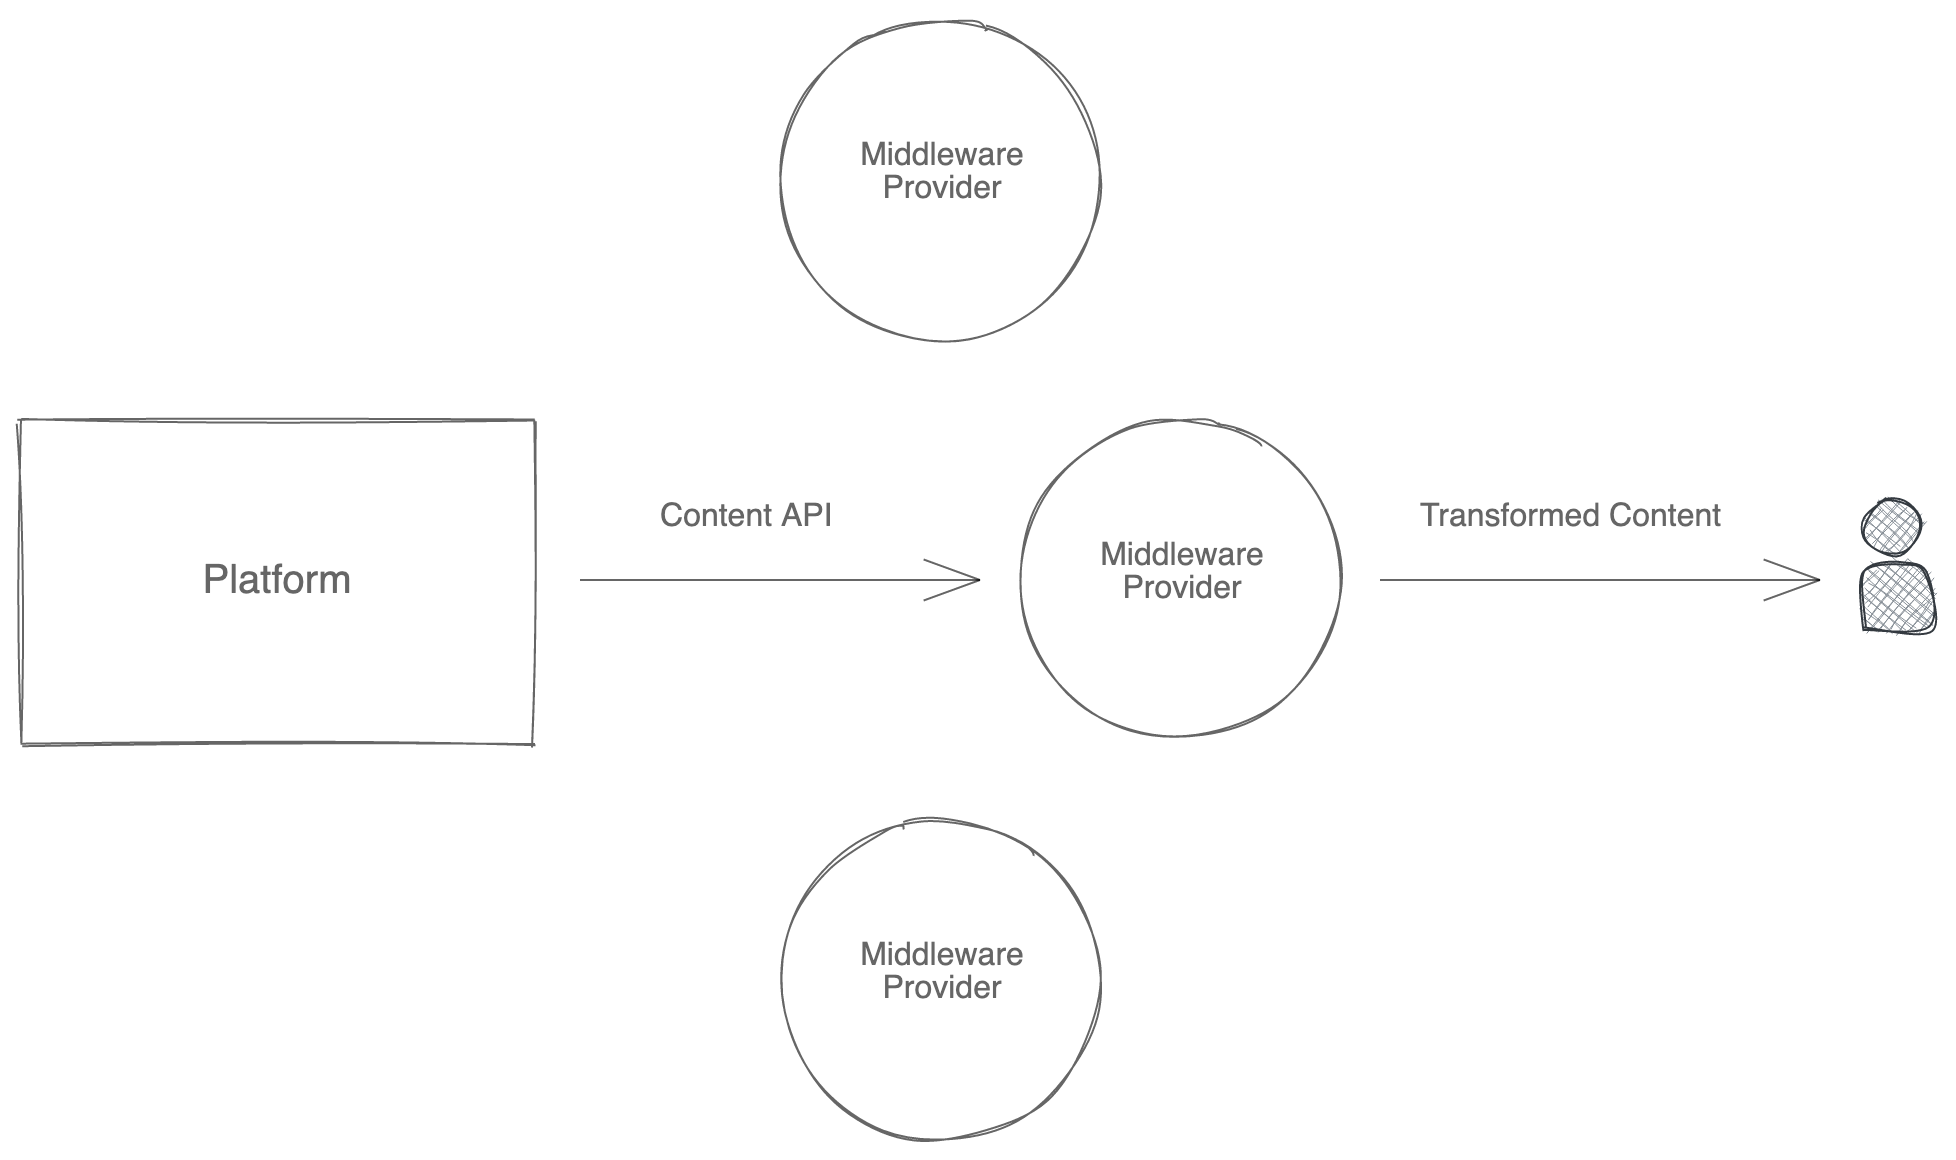 A basic middleware flow diagram